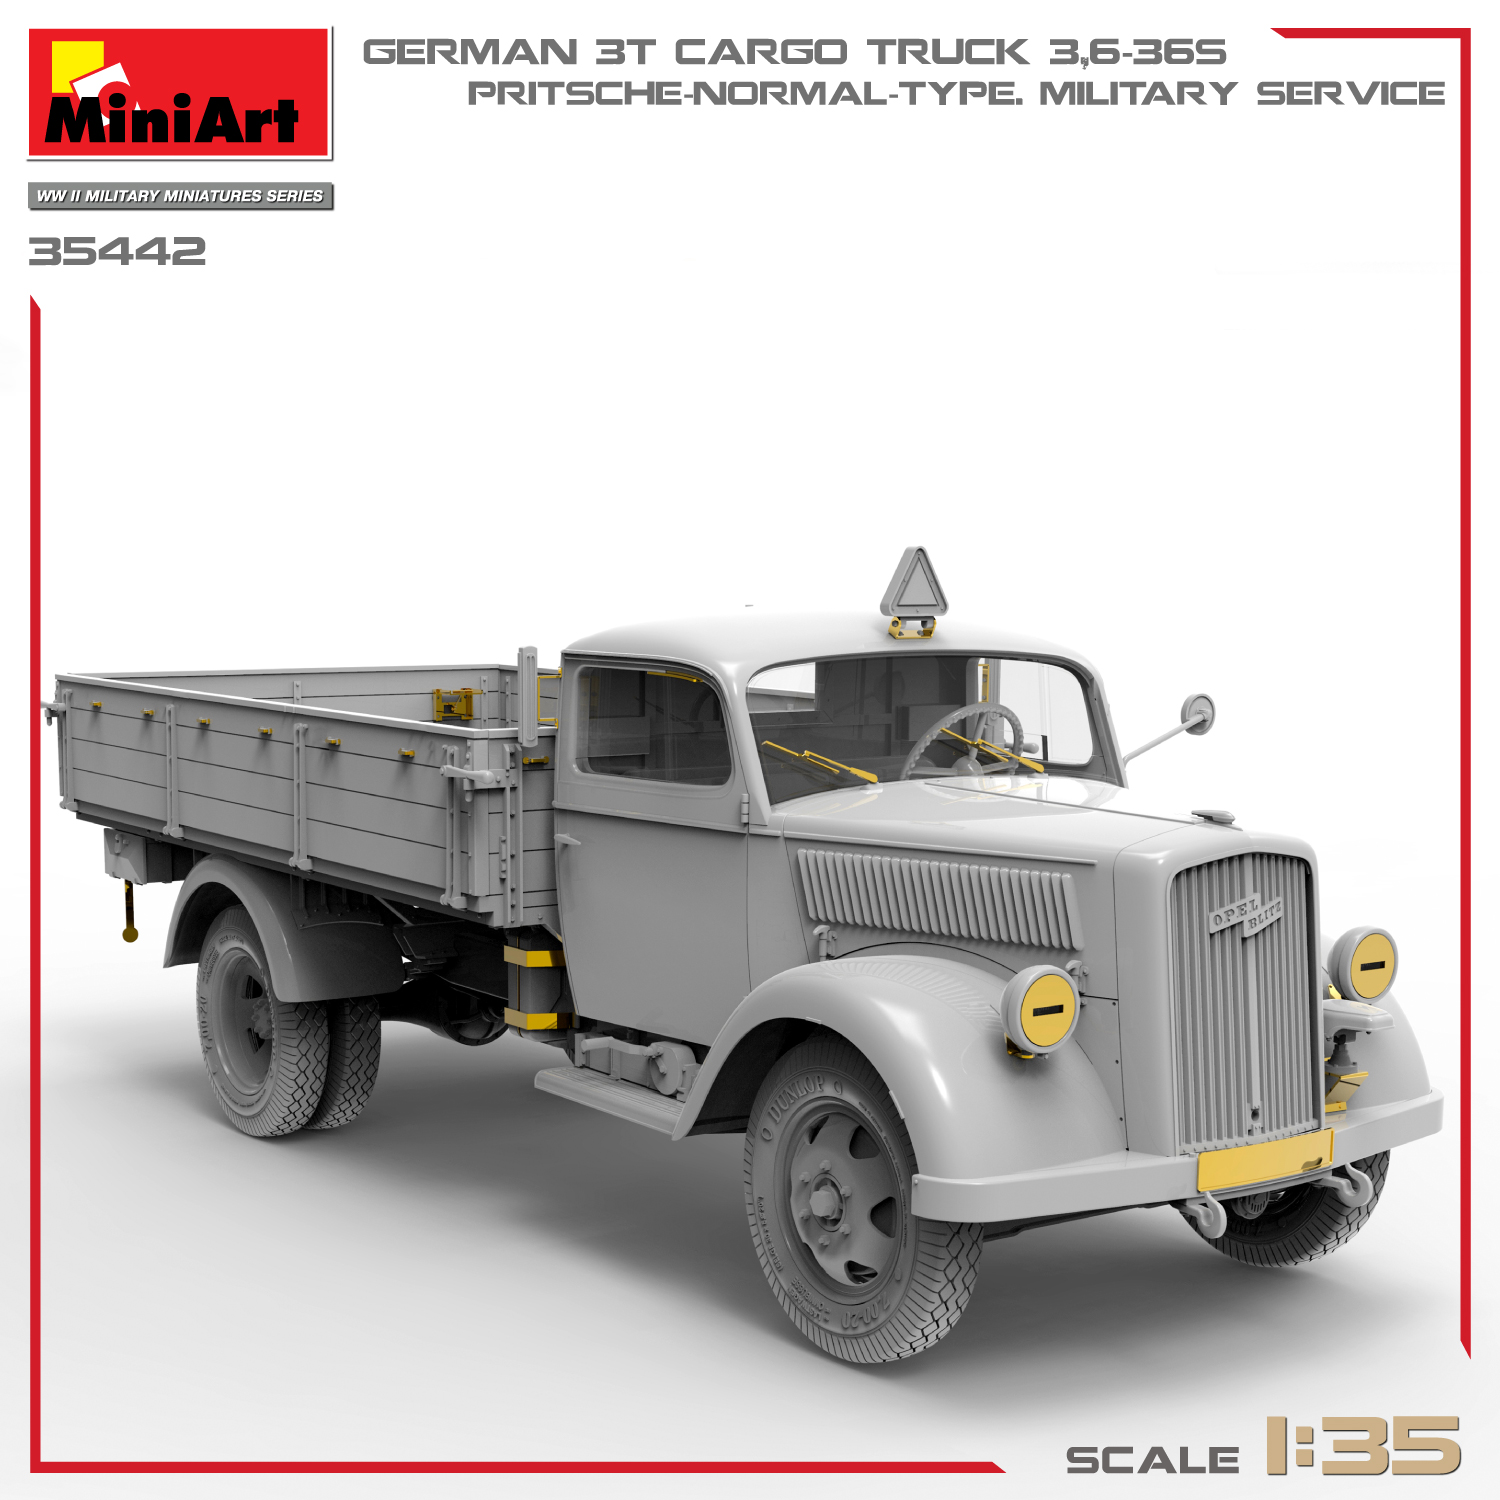 Miniart 1/35 3t Cargo Truck 3,6-36S Pritsche Normal Type # 35442